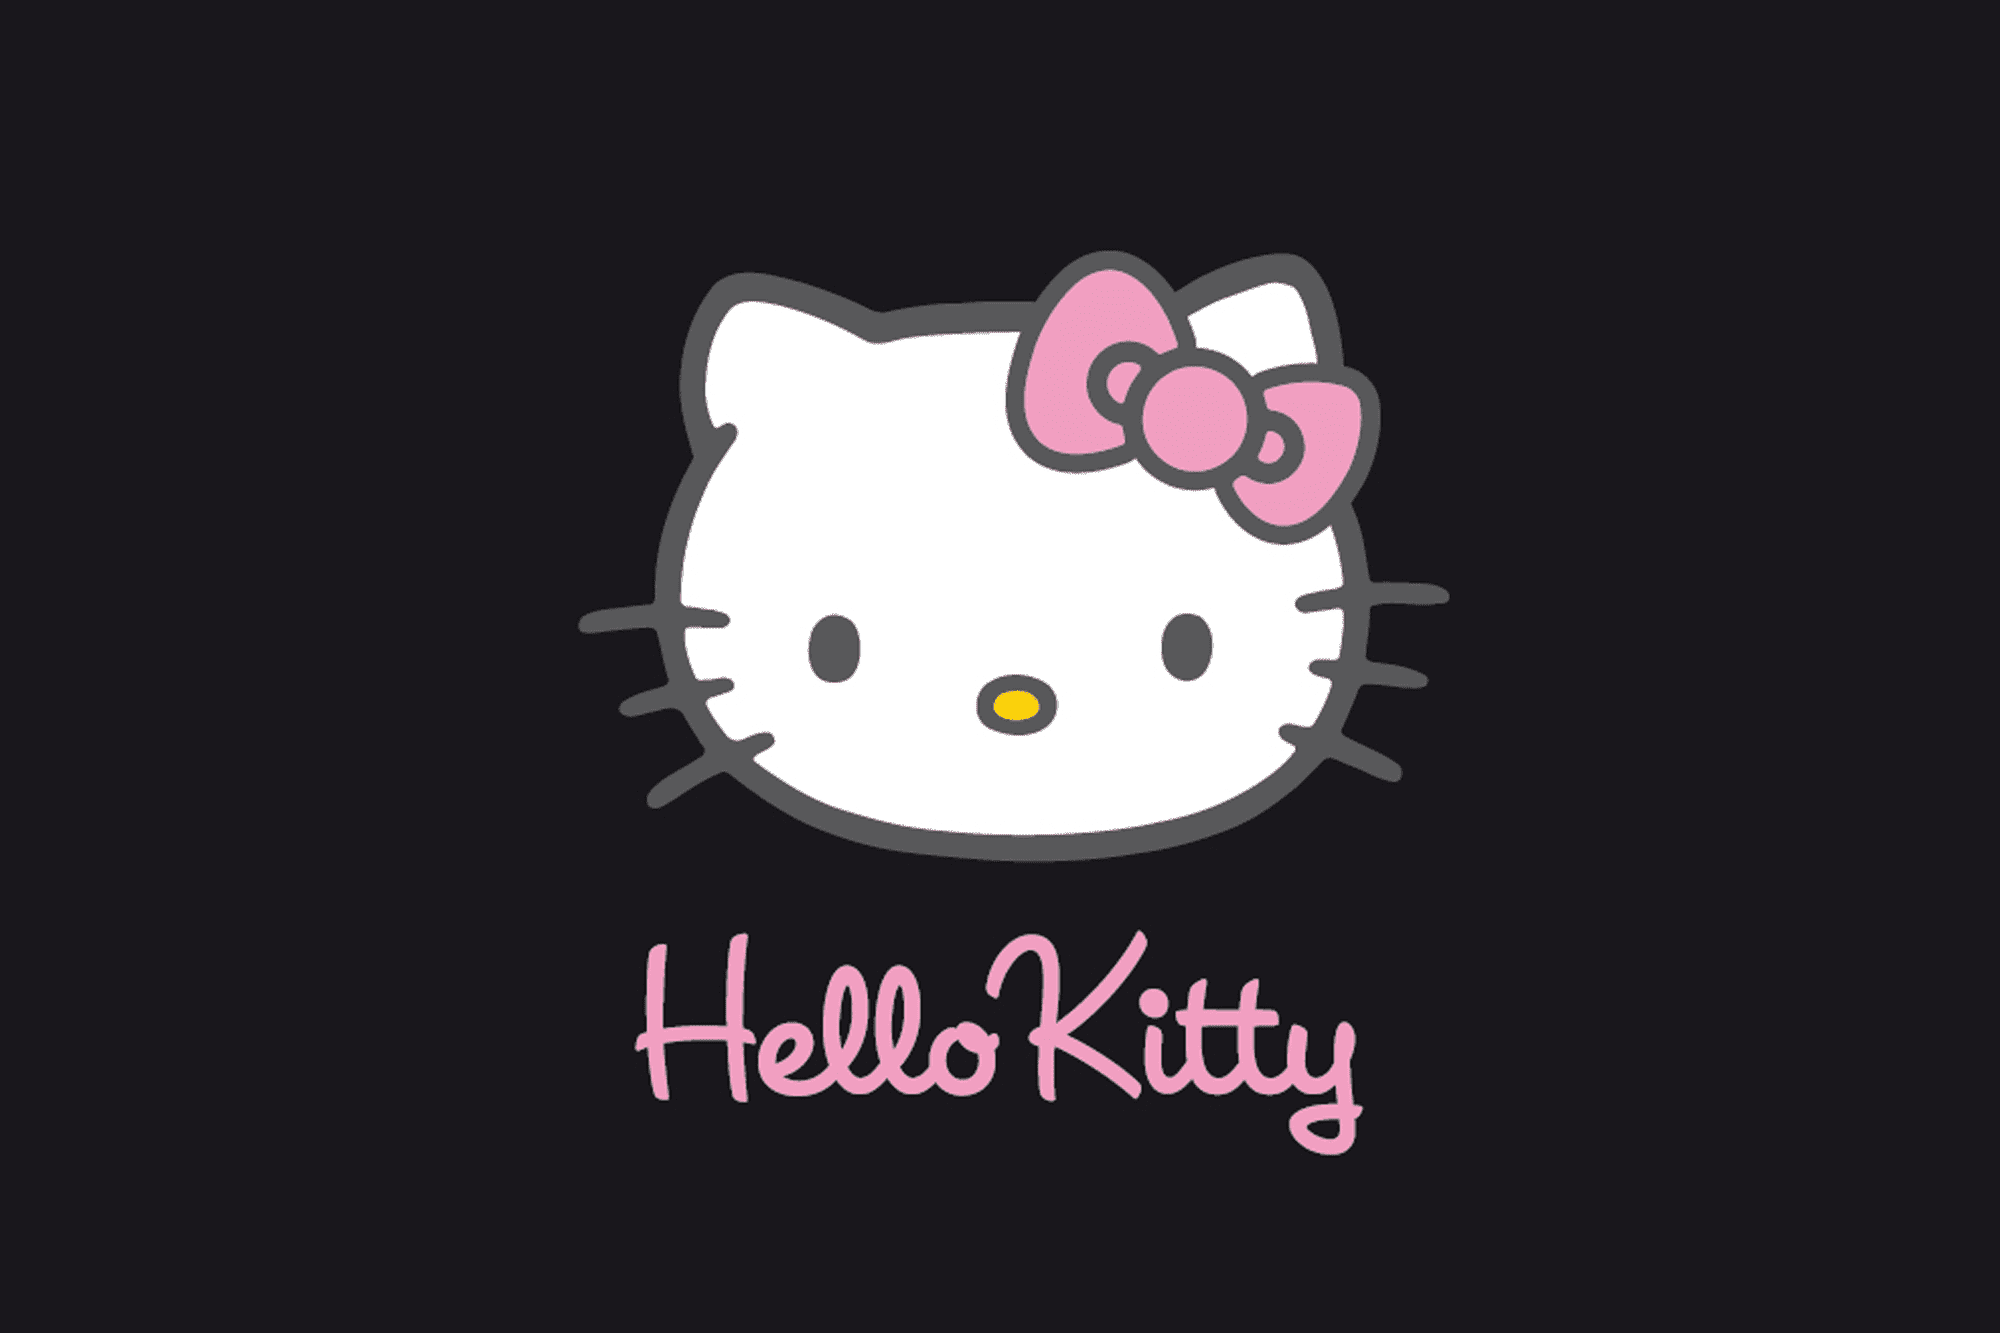 60+] Free Hello Kitty Wallpaper Desktop - WallpaperSafari